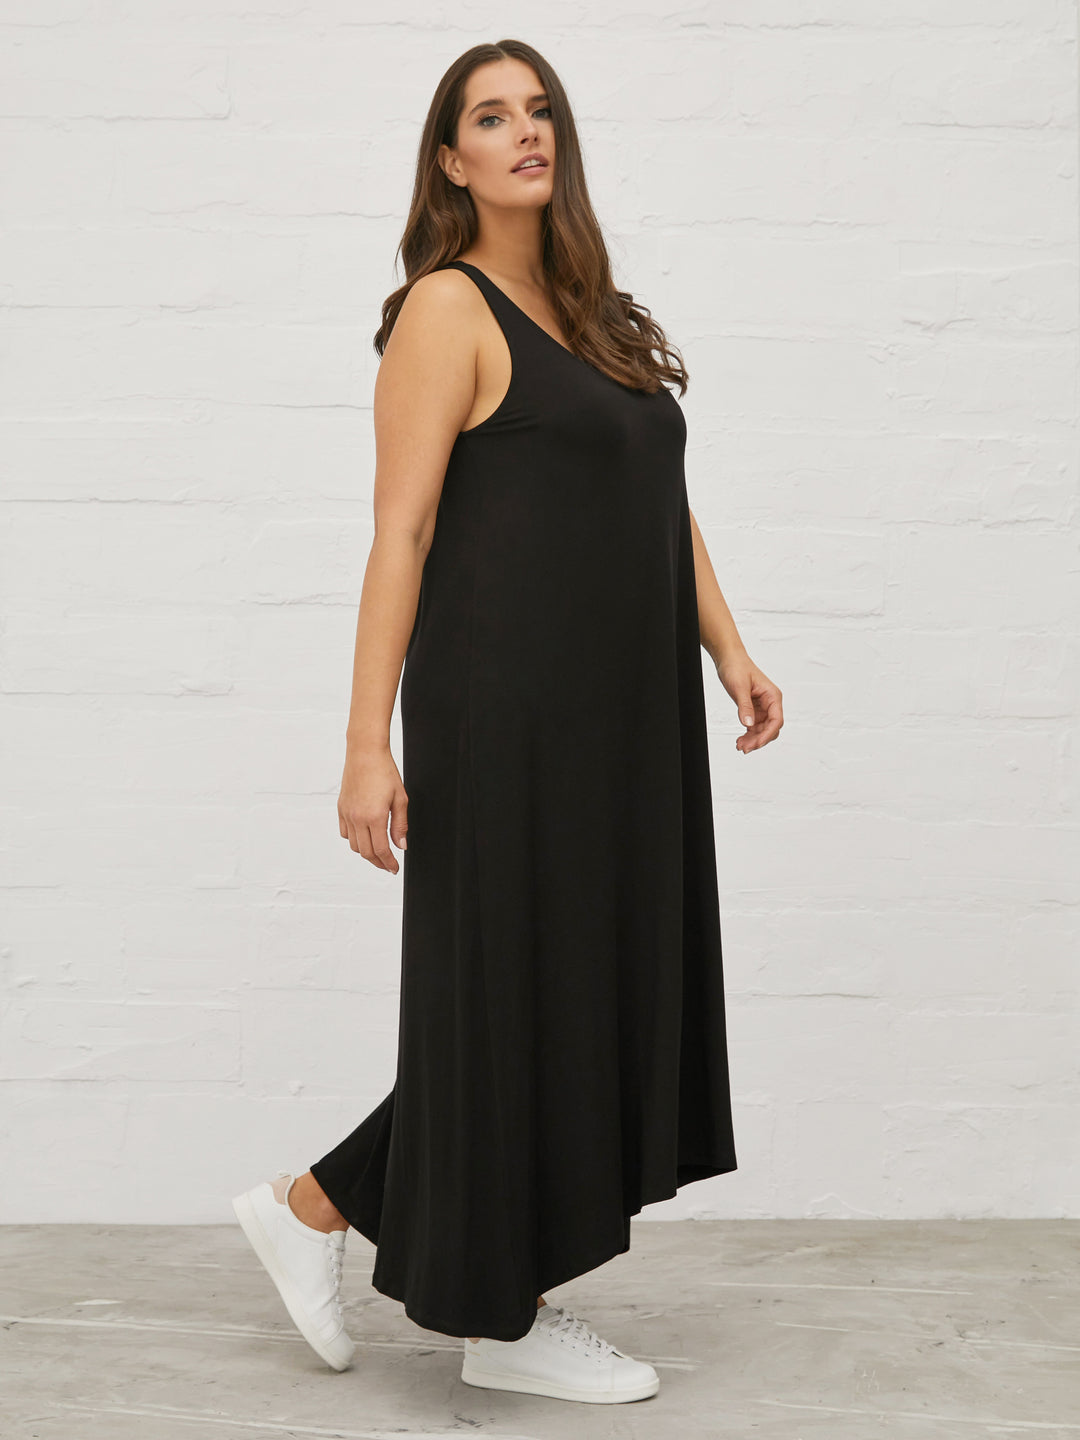 zwarte zomerse jurk - mat fashion - 0000.7502.C - black - grote maten - dameskleding - kledingwinkel - herent - leuven